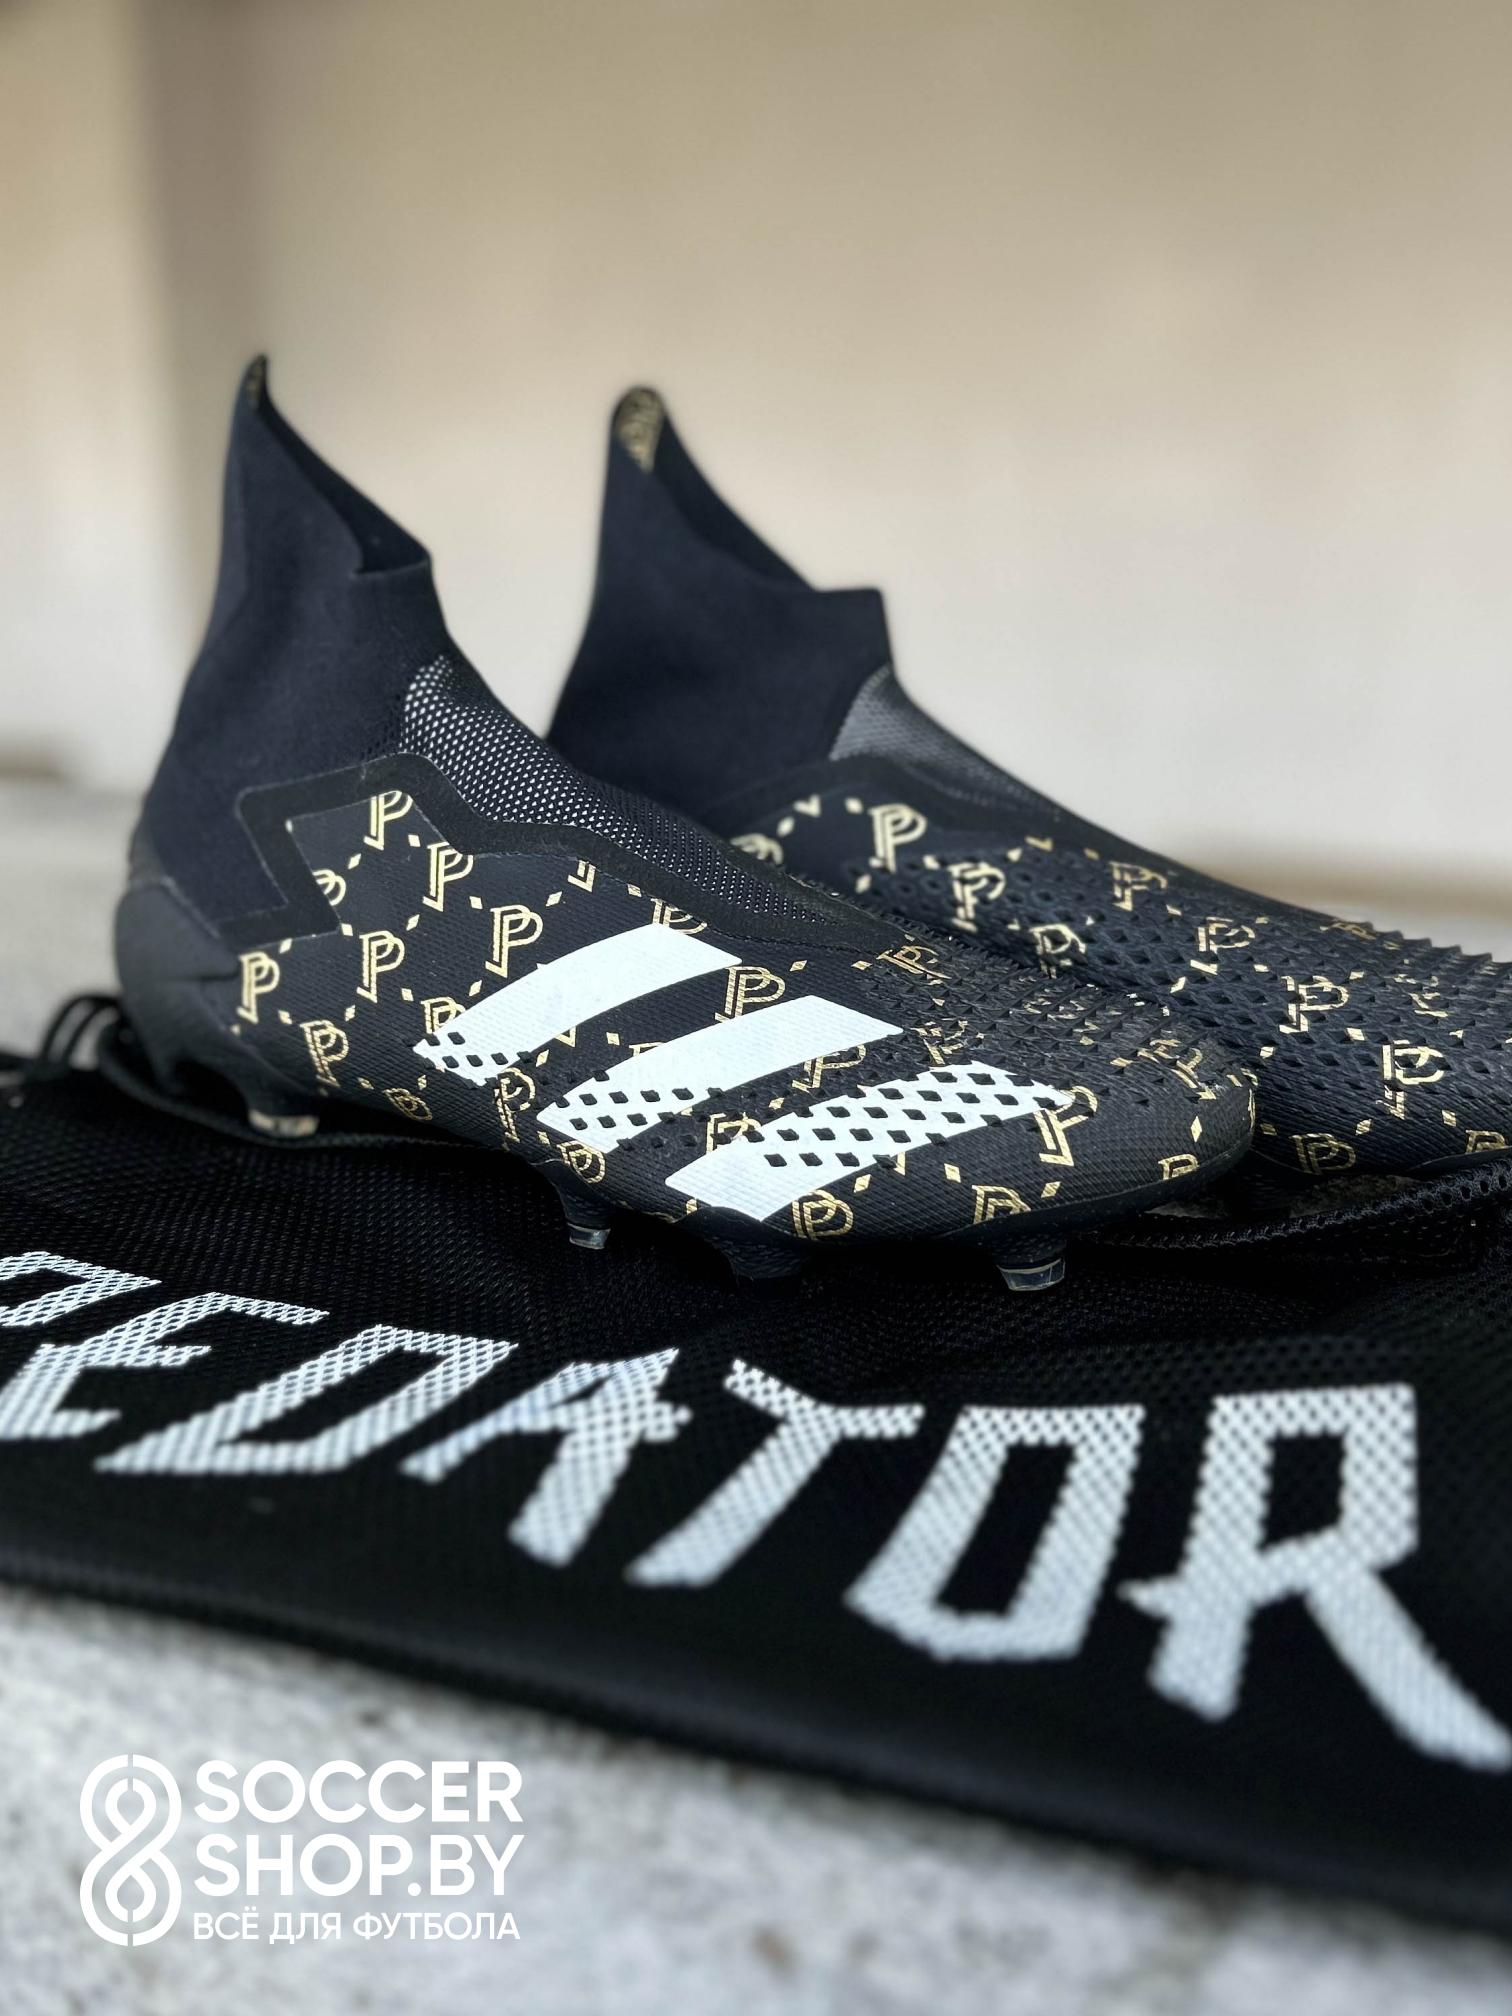 Adidas Paul Pogba Predator Mutator 20+ 